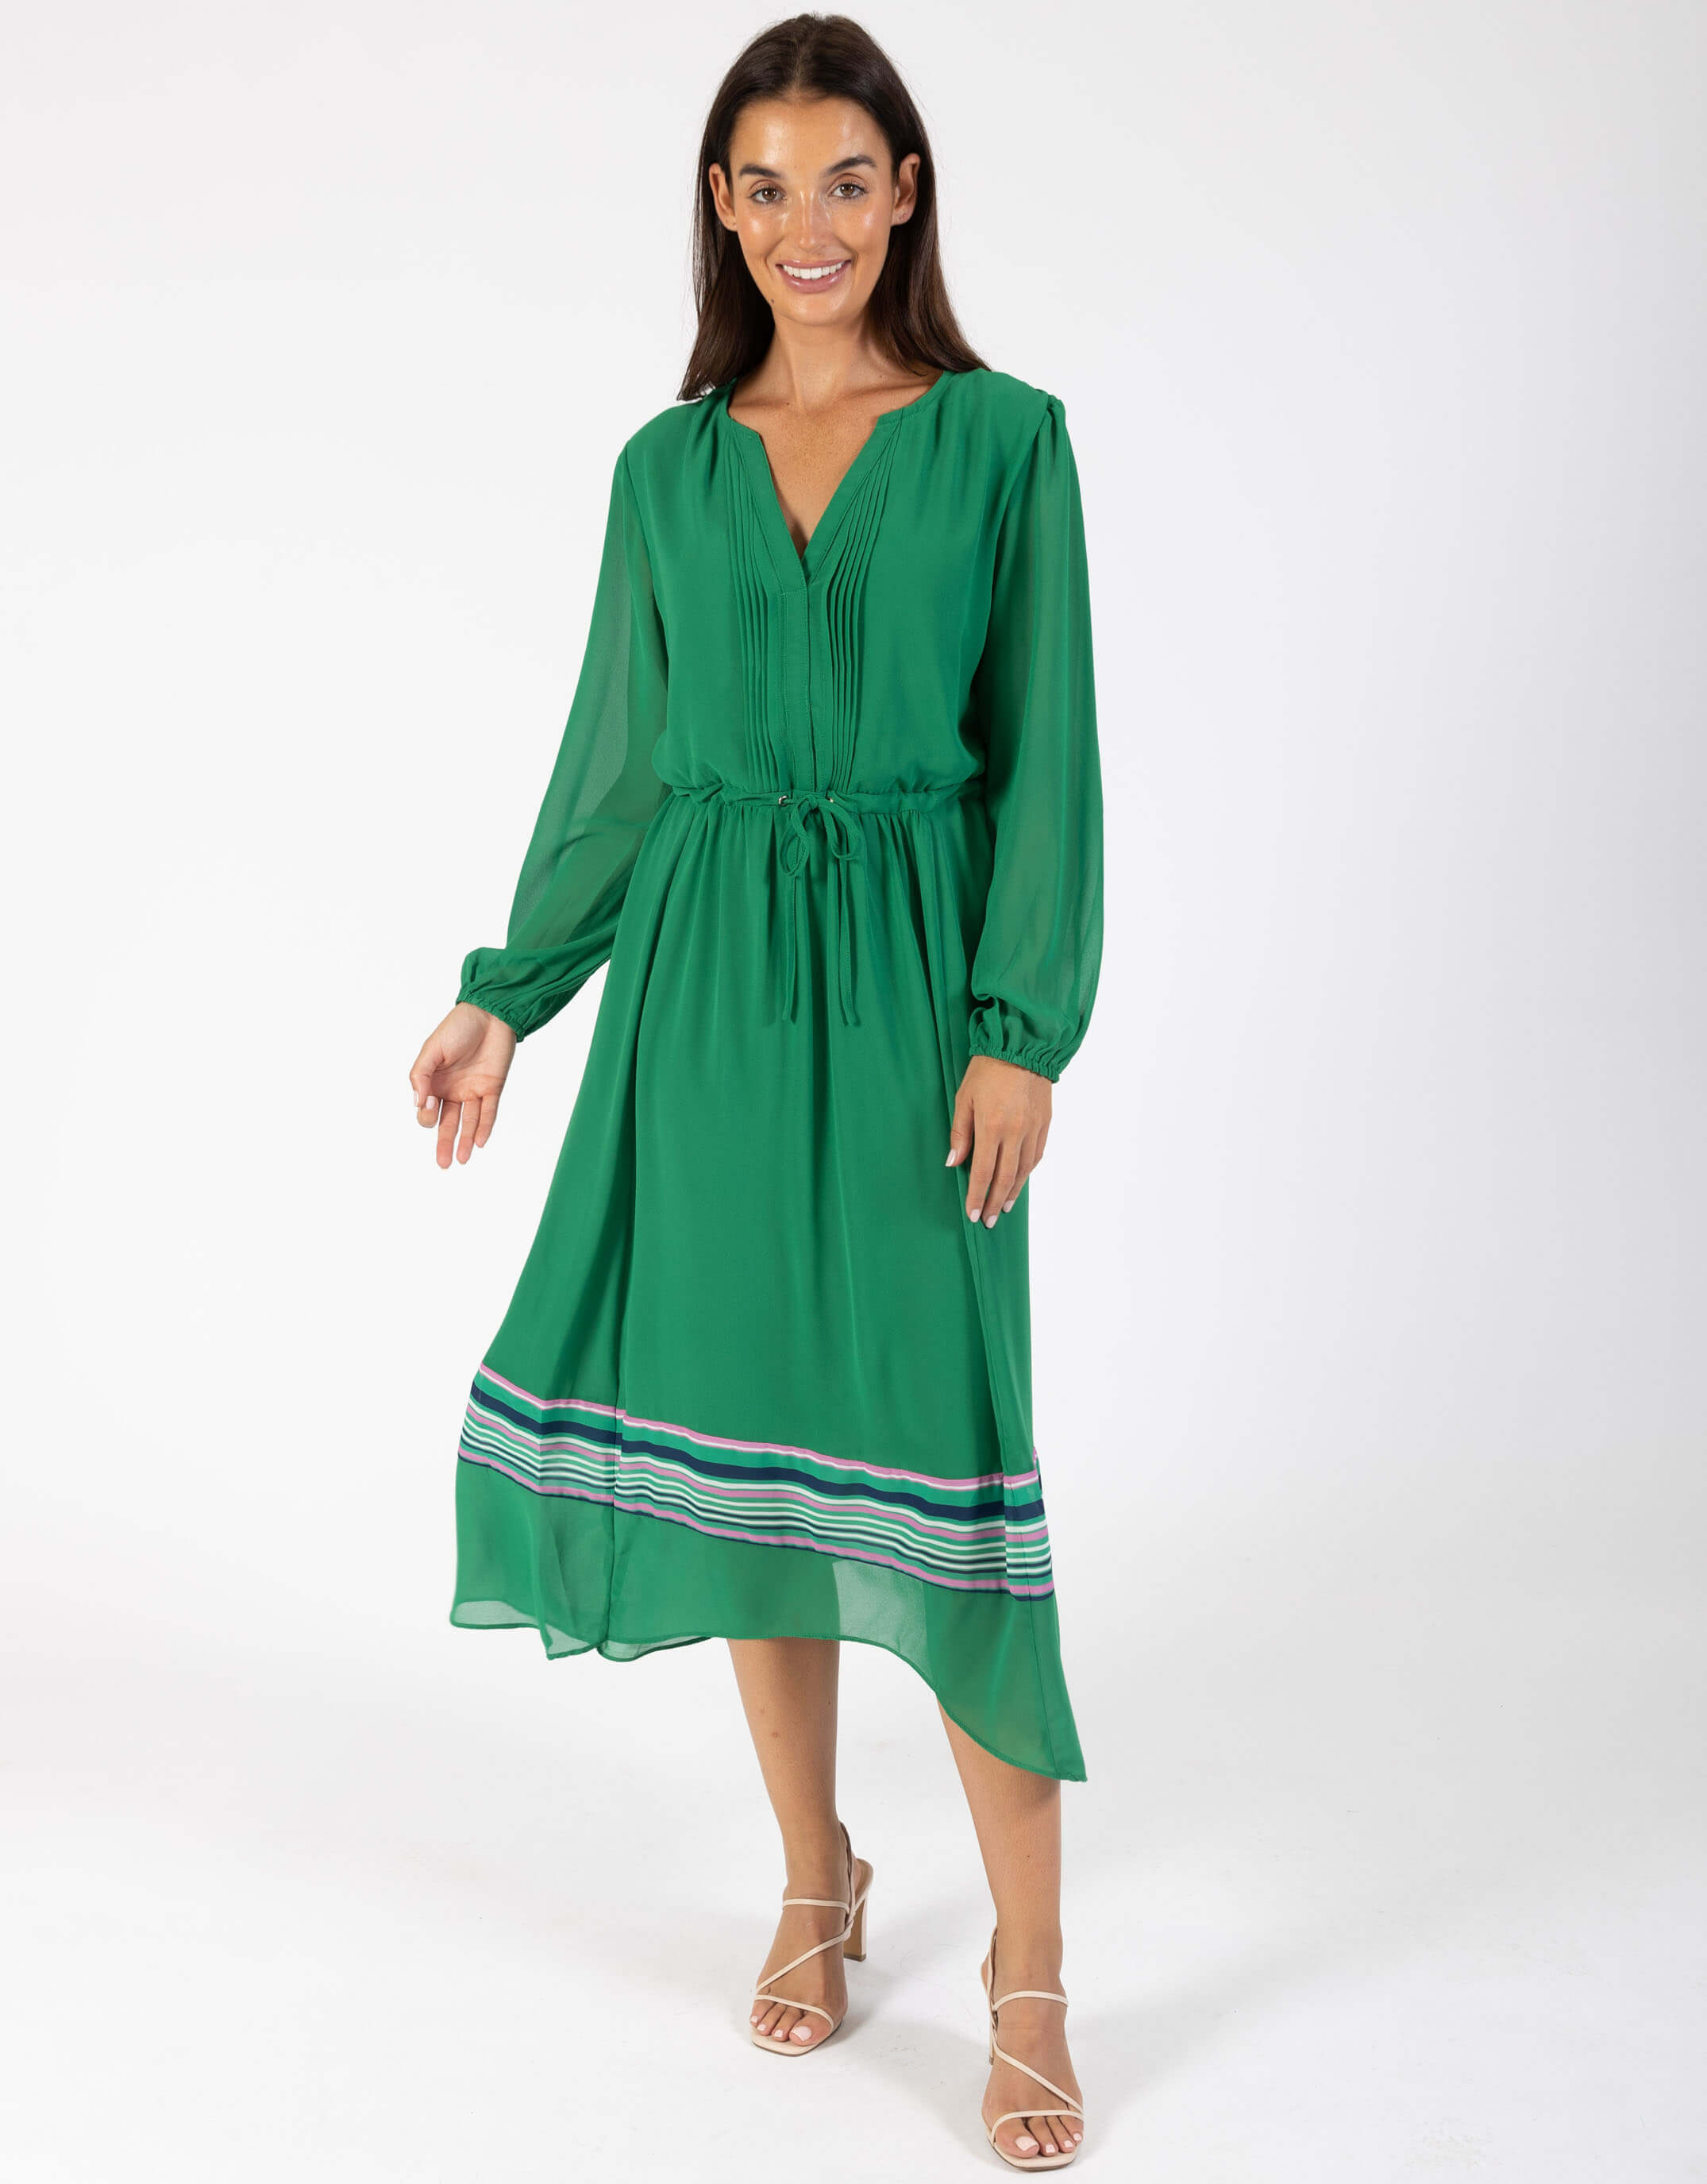 white-co-madison-avenue-midi-dress-emerald-womens-clothing